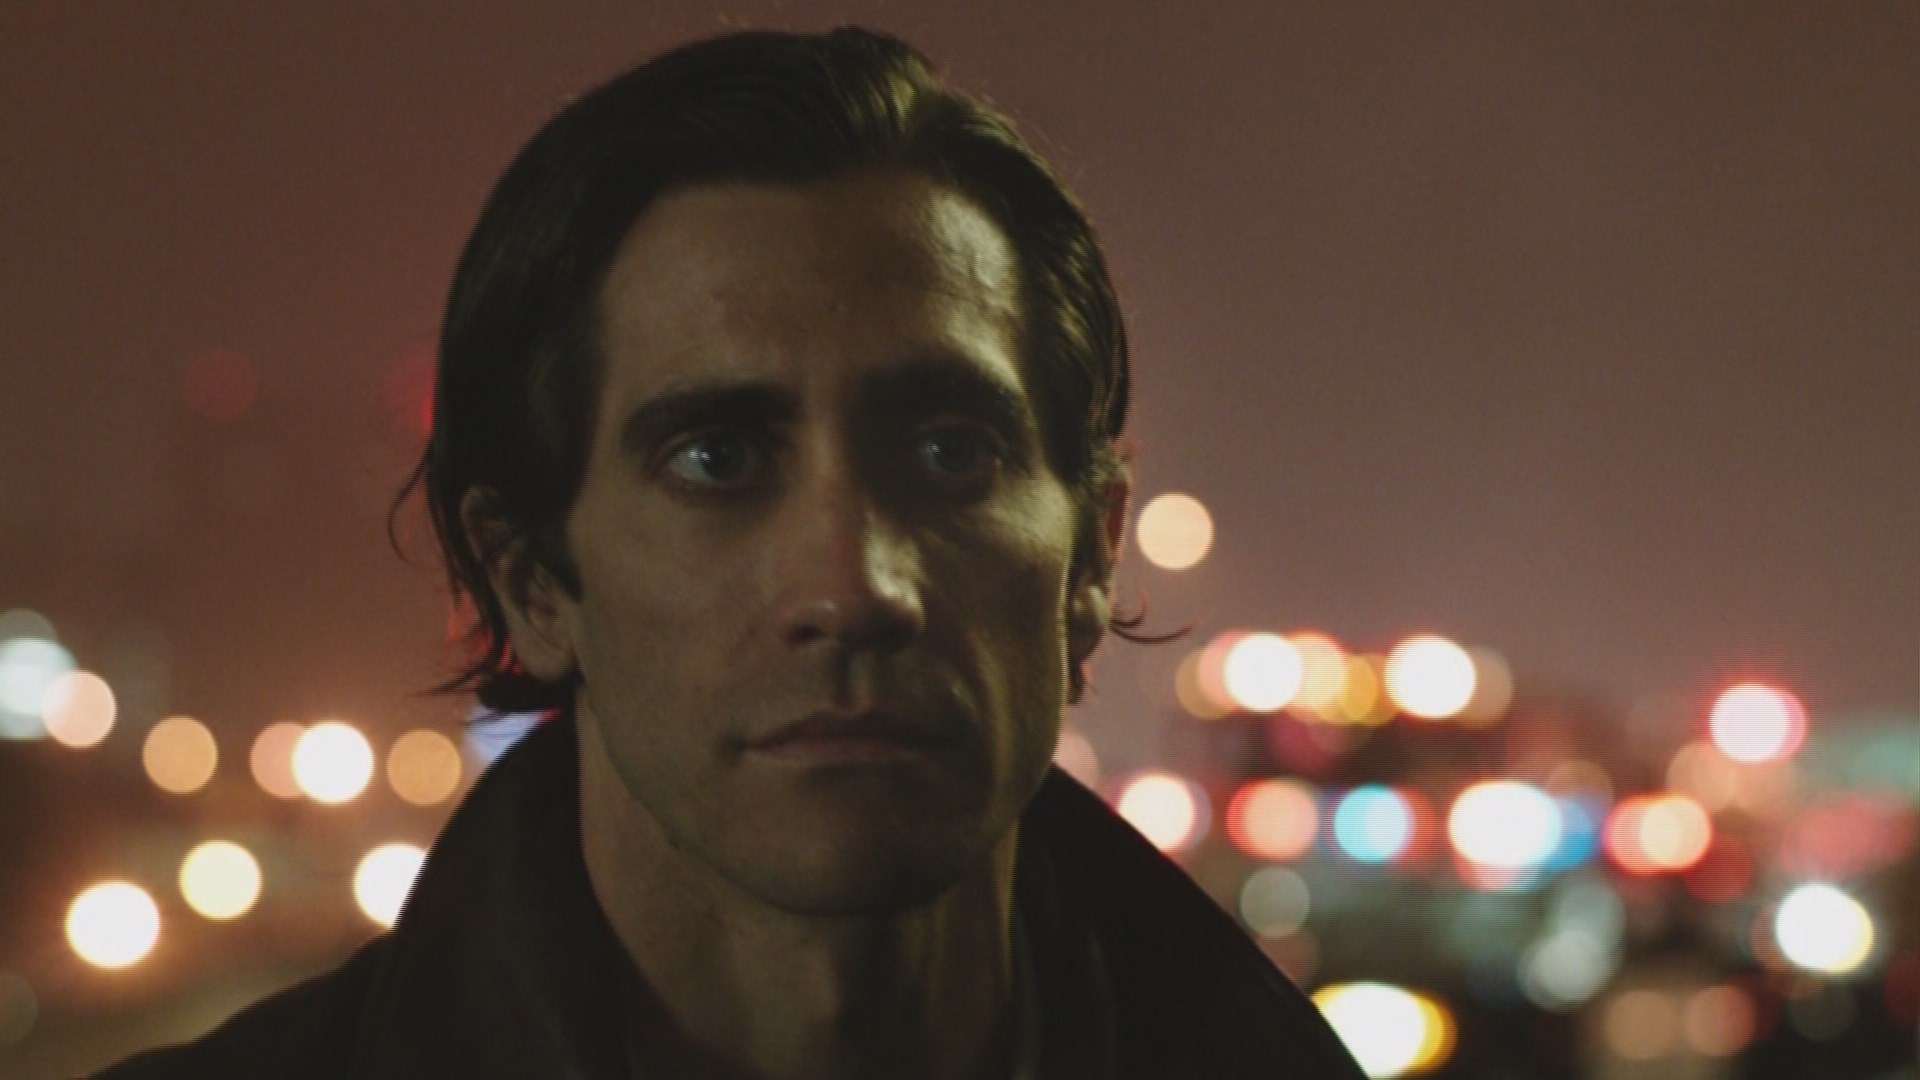 Hunk Jake Gyllenhaal goes creeper in movie Nightcrawler